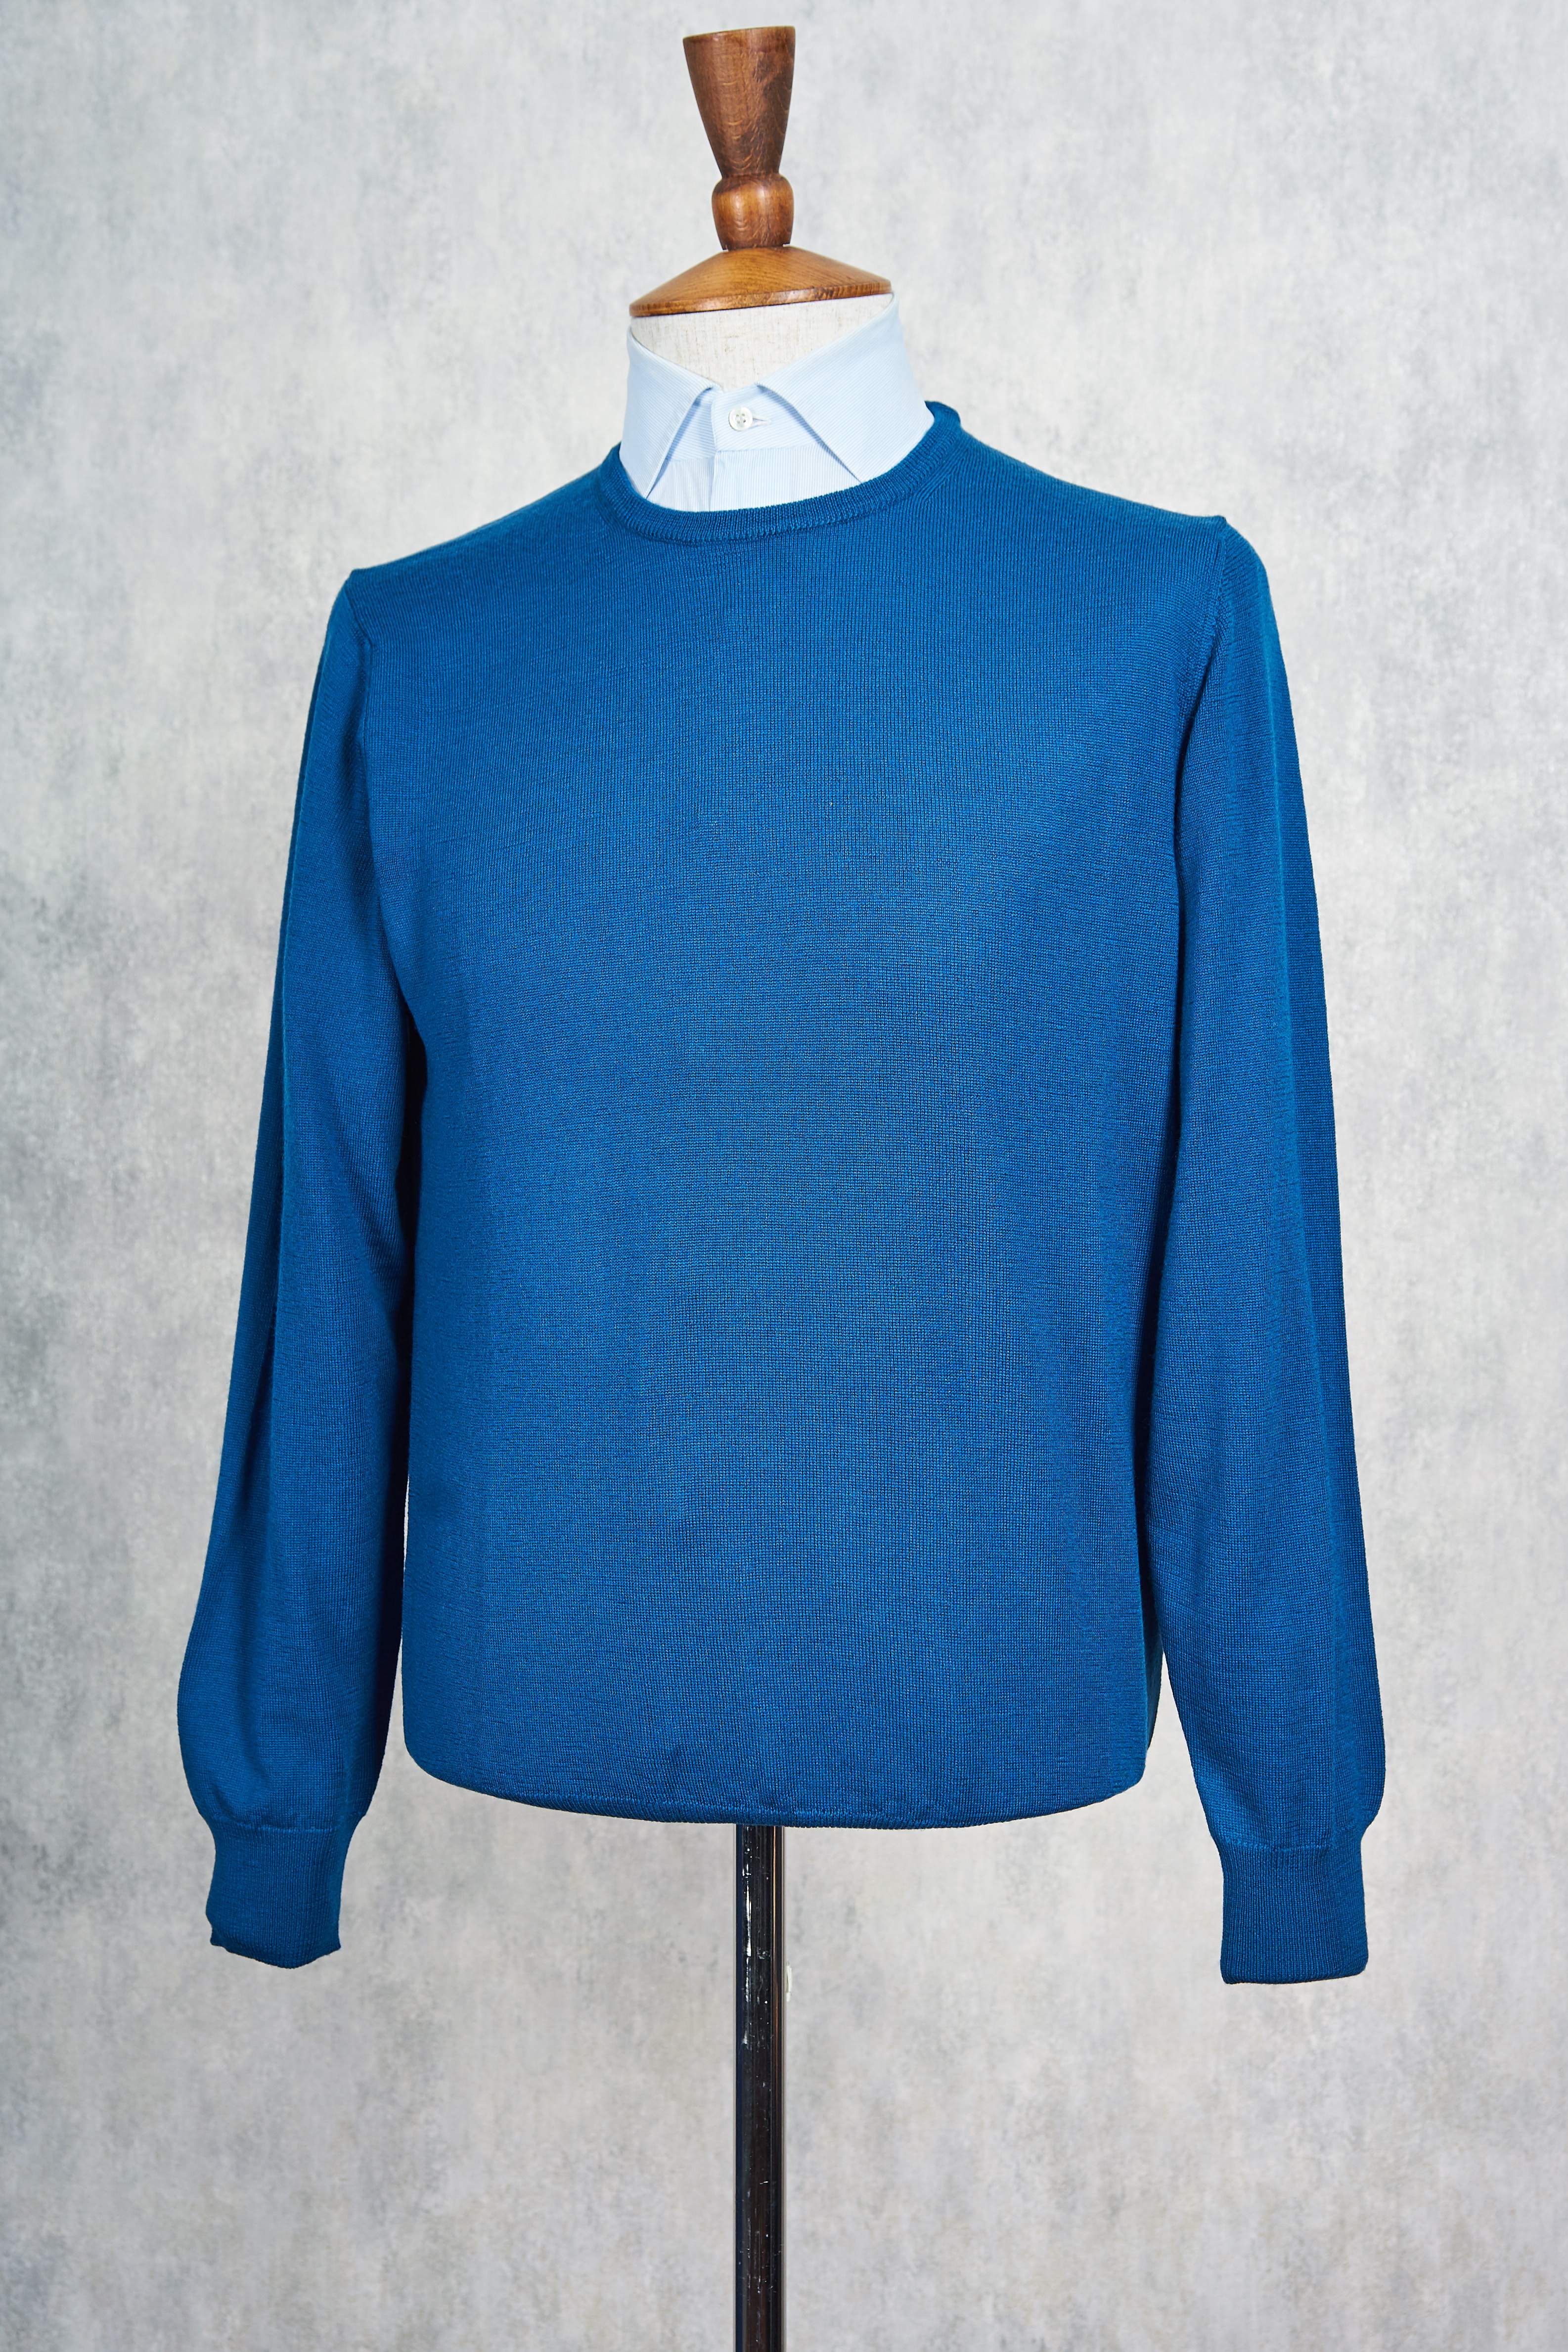 Ascot Chang Blue Extra-Fine Merino Wool Round Neck Sweater